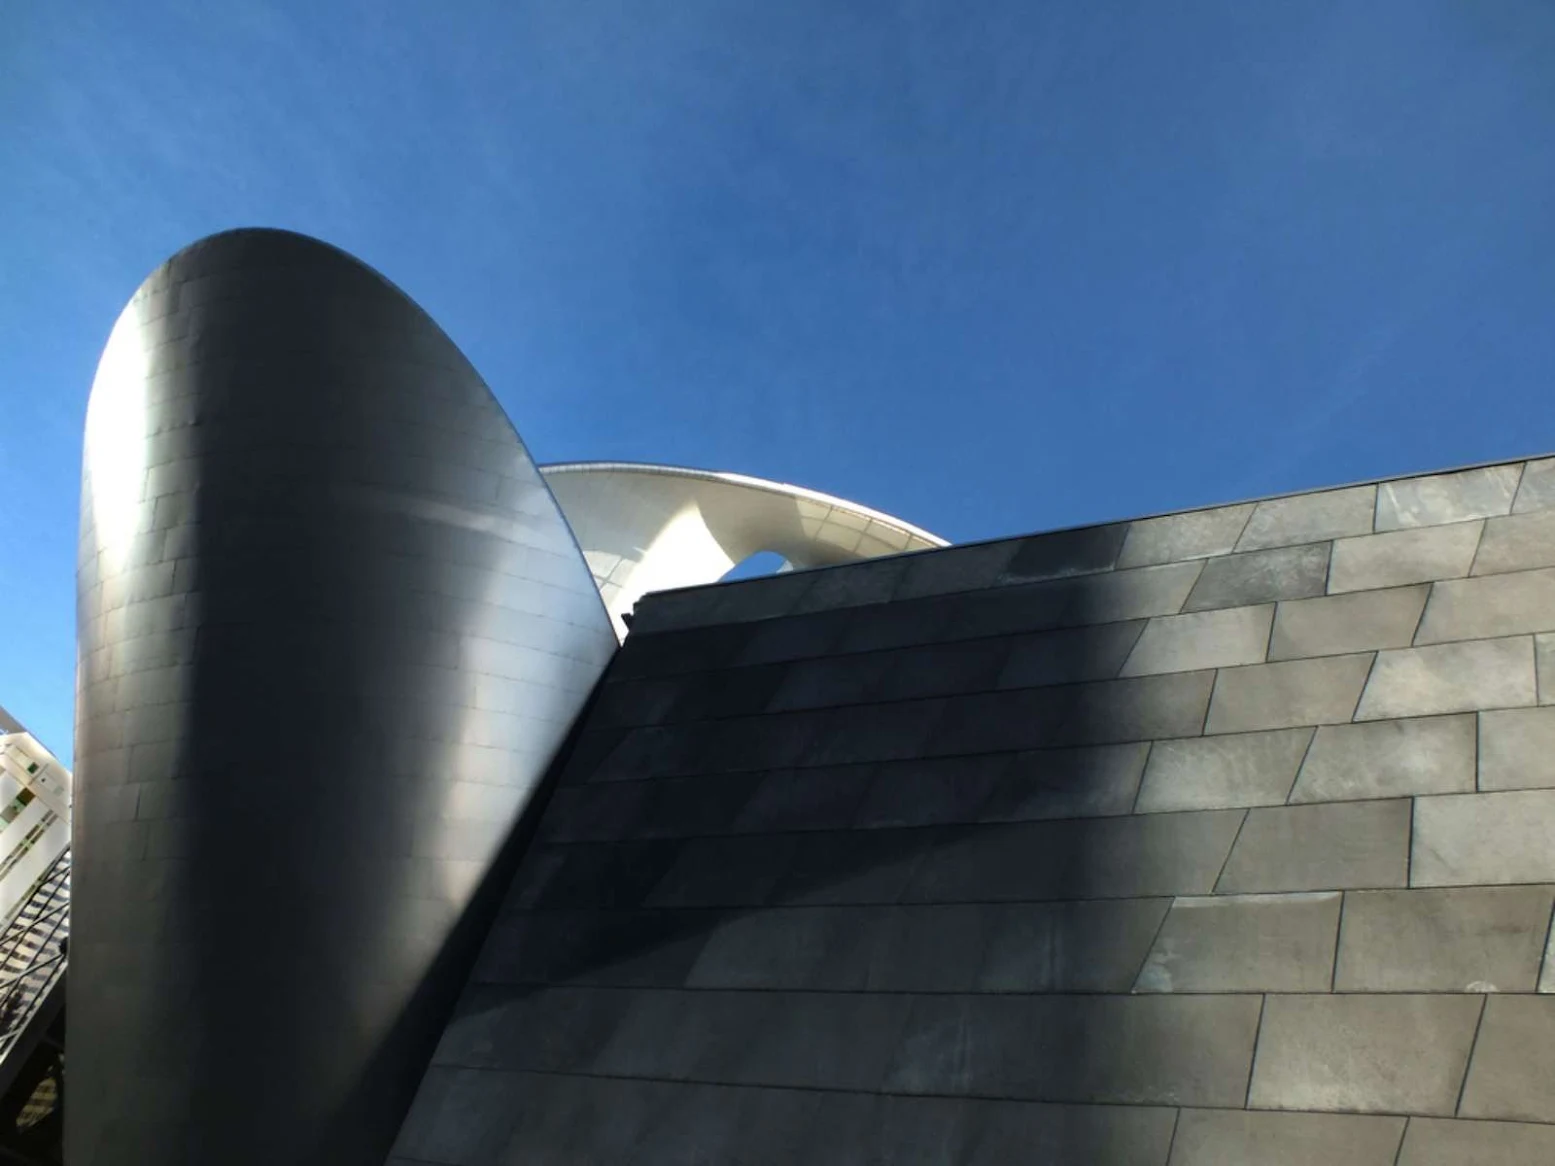 Art Gallery of Alberta by Randall Stout Architects